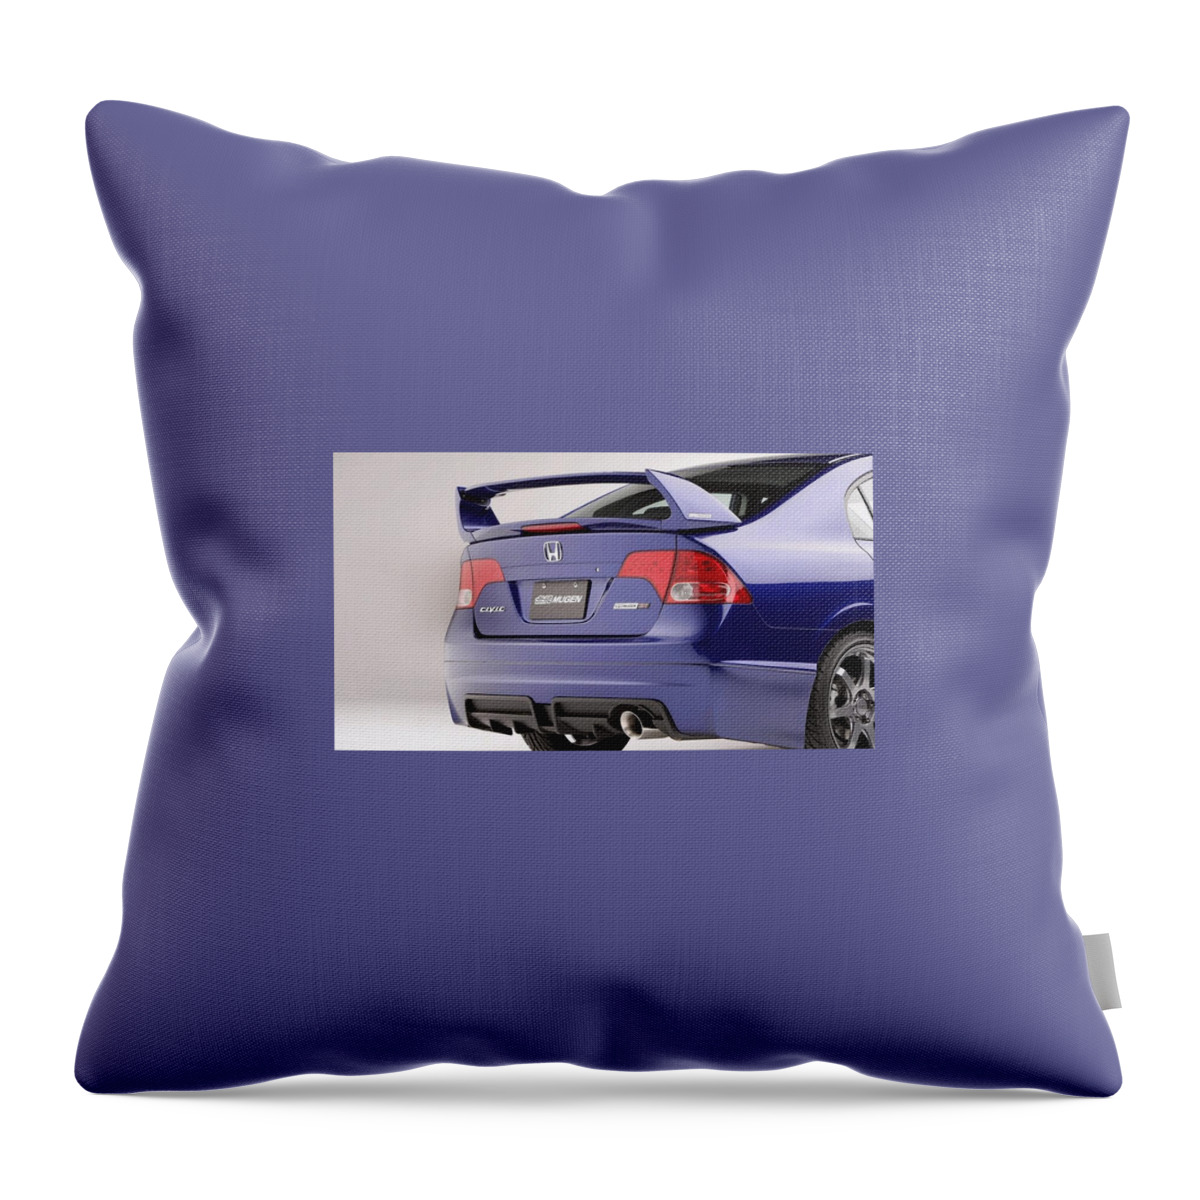 Honda Civic Si Mugen Throw Pillow featuring the digital art Honda Civic Si Mugen by Maye Loeser